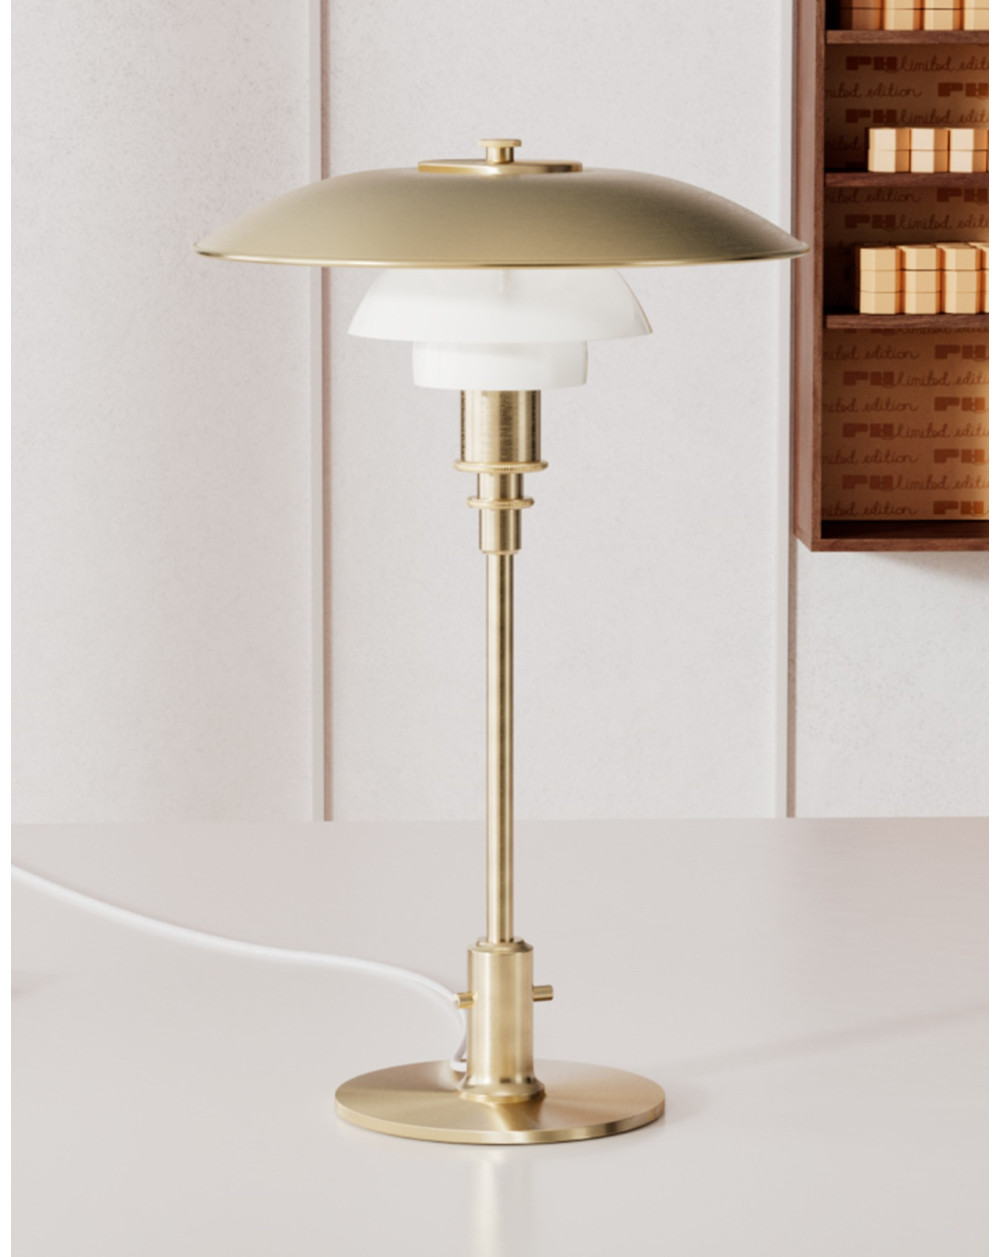 PH 3/3 LAMPE DE TABLE - PH Limited Edition 